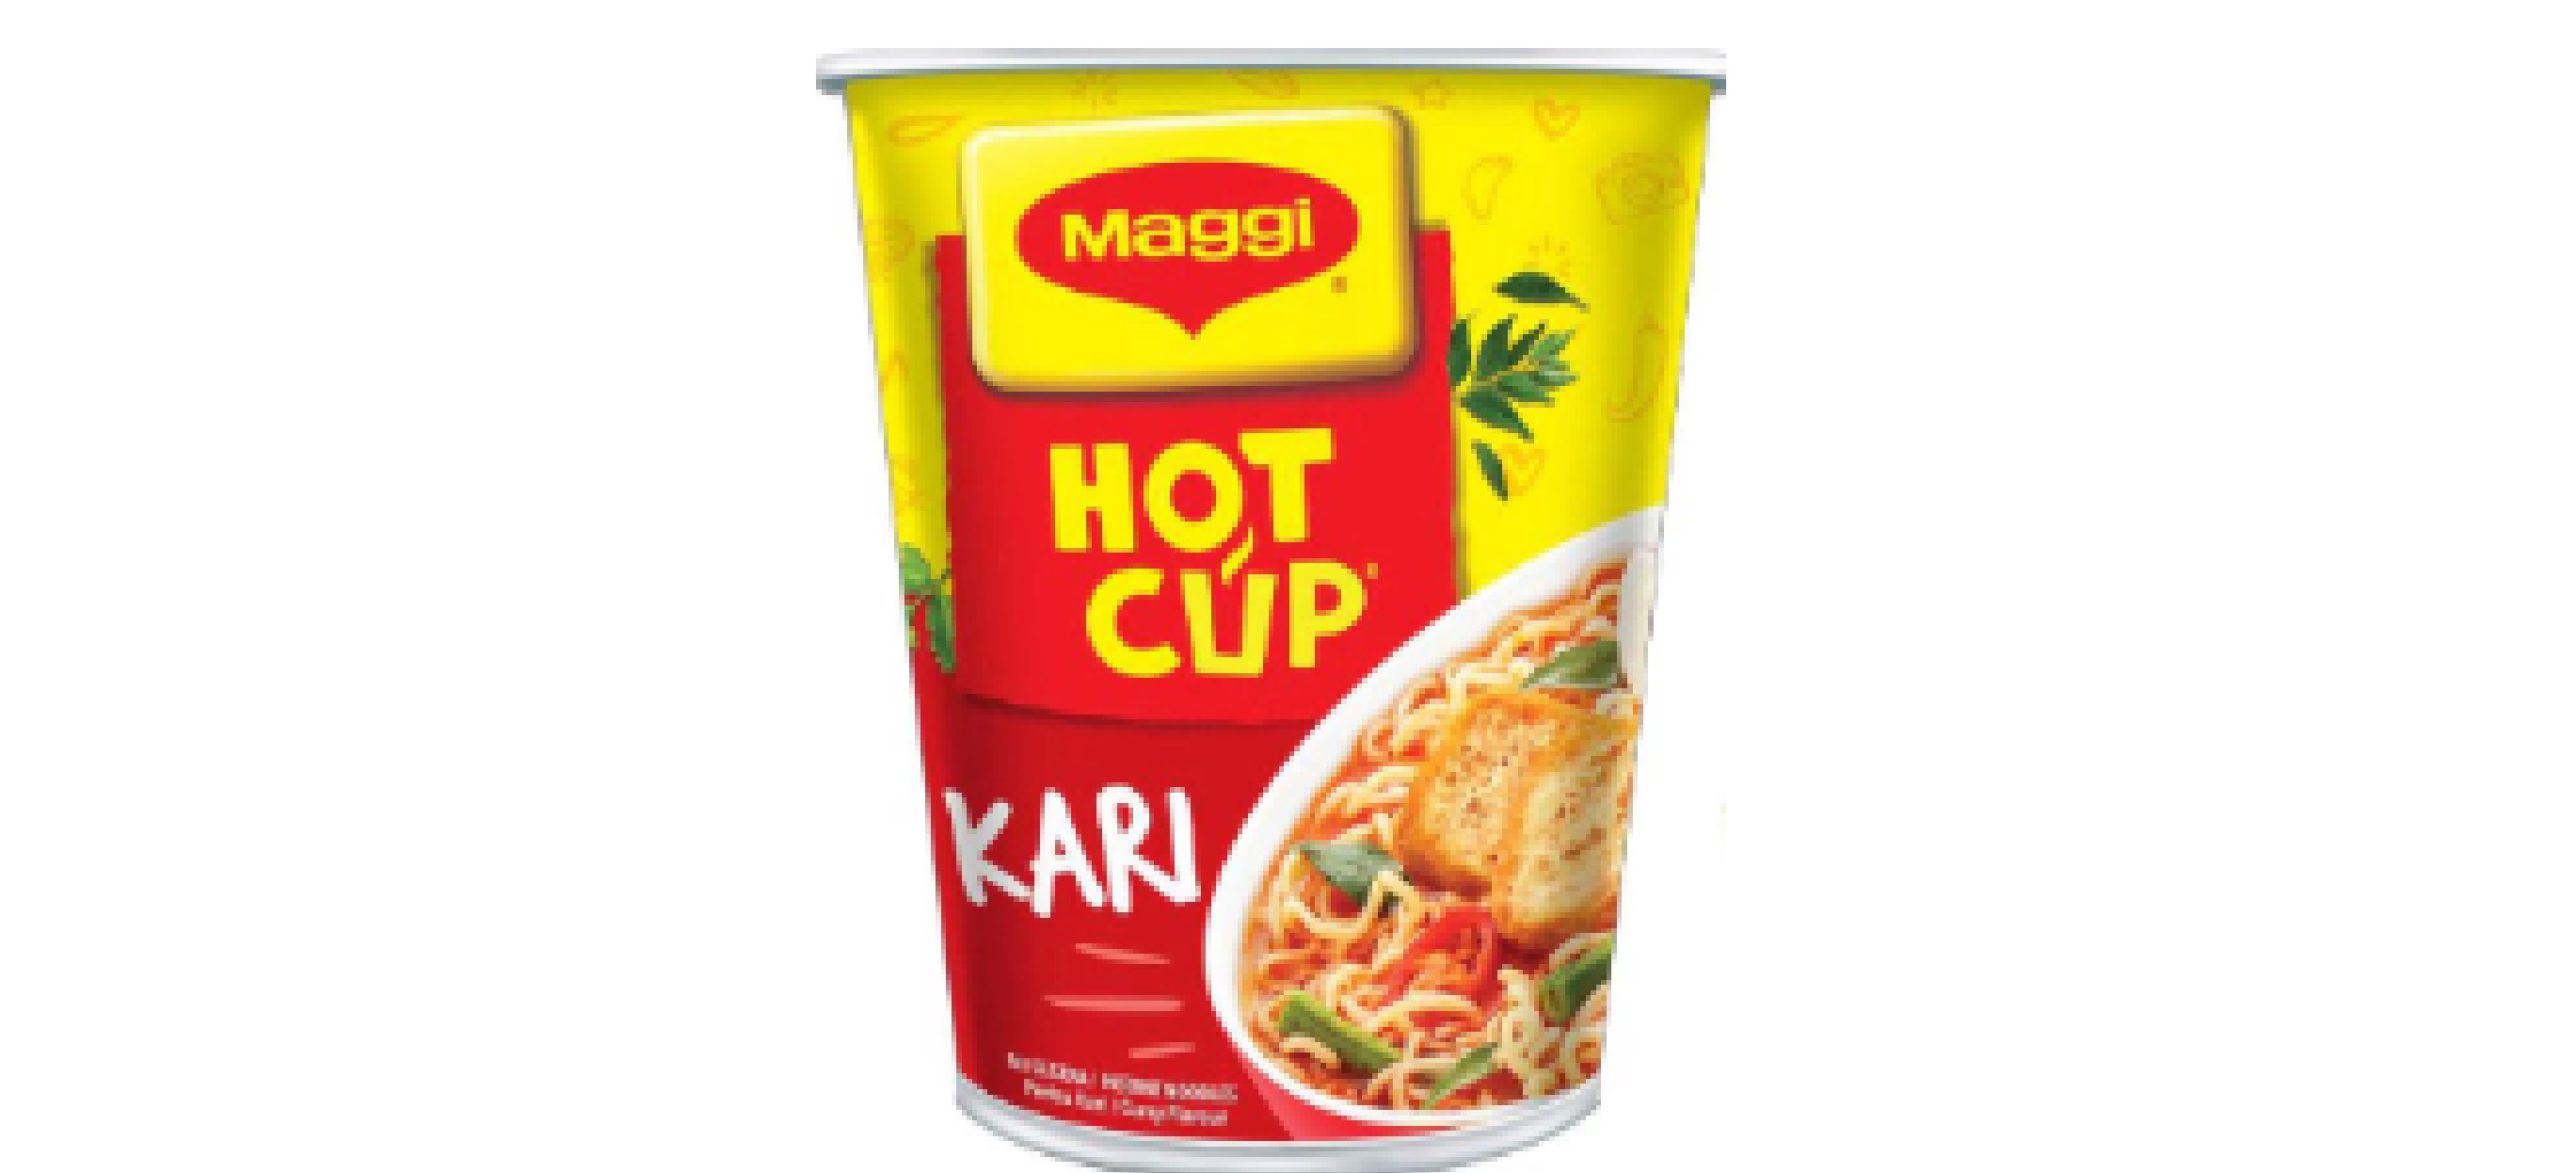 Maggi Hot Cup Kari -58g